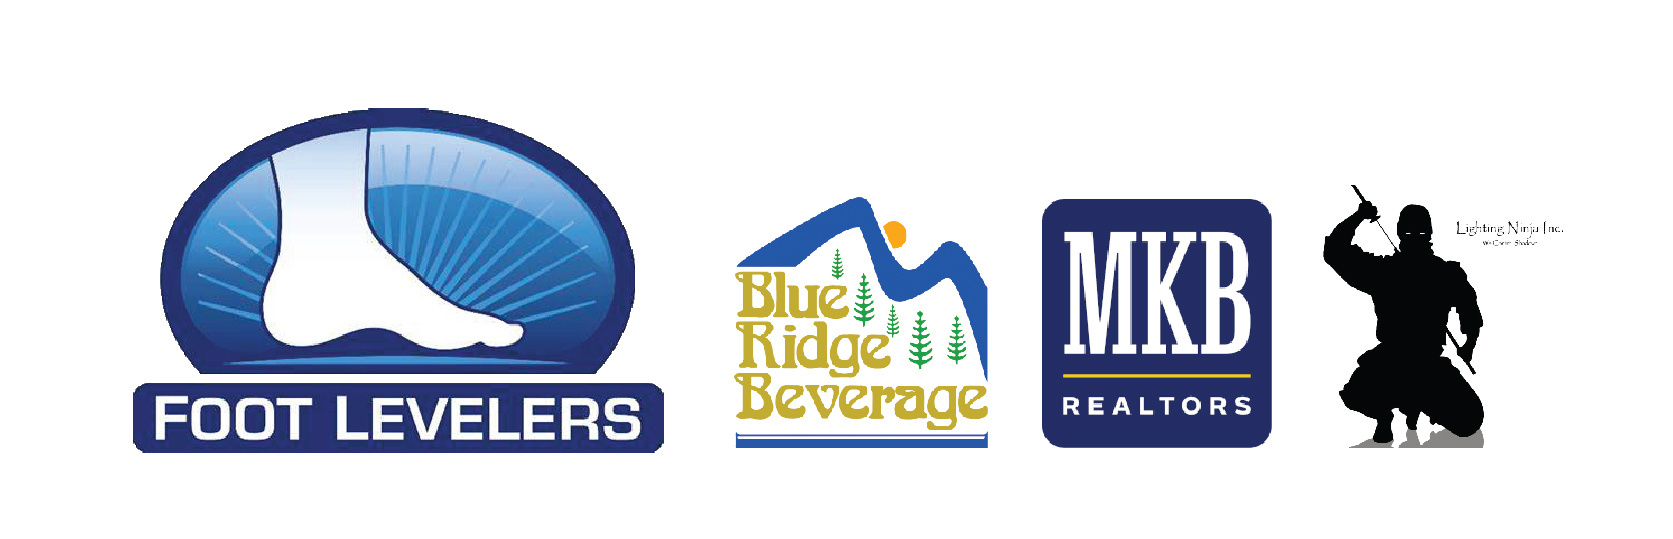 Logos for Foot Levelers, Blue Ridge Beverage, MKB Realtors, and Lighting Ninja